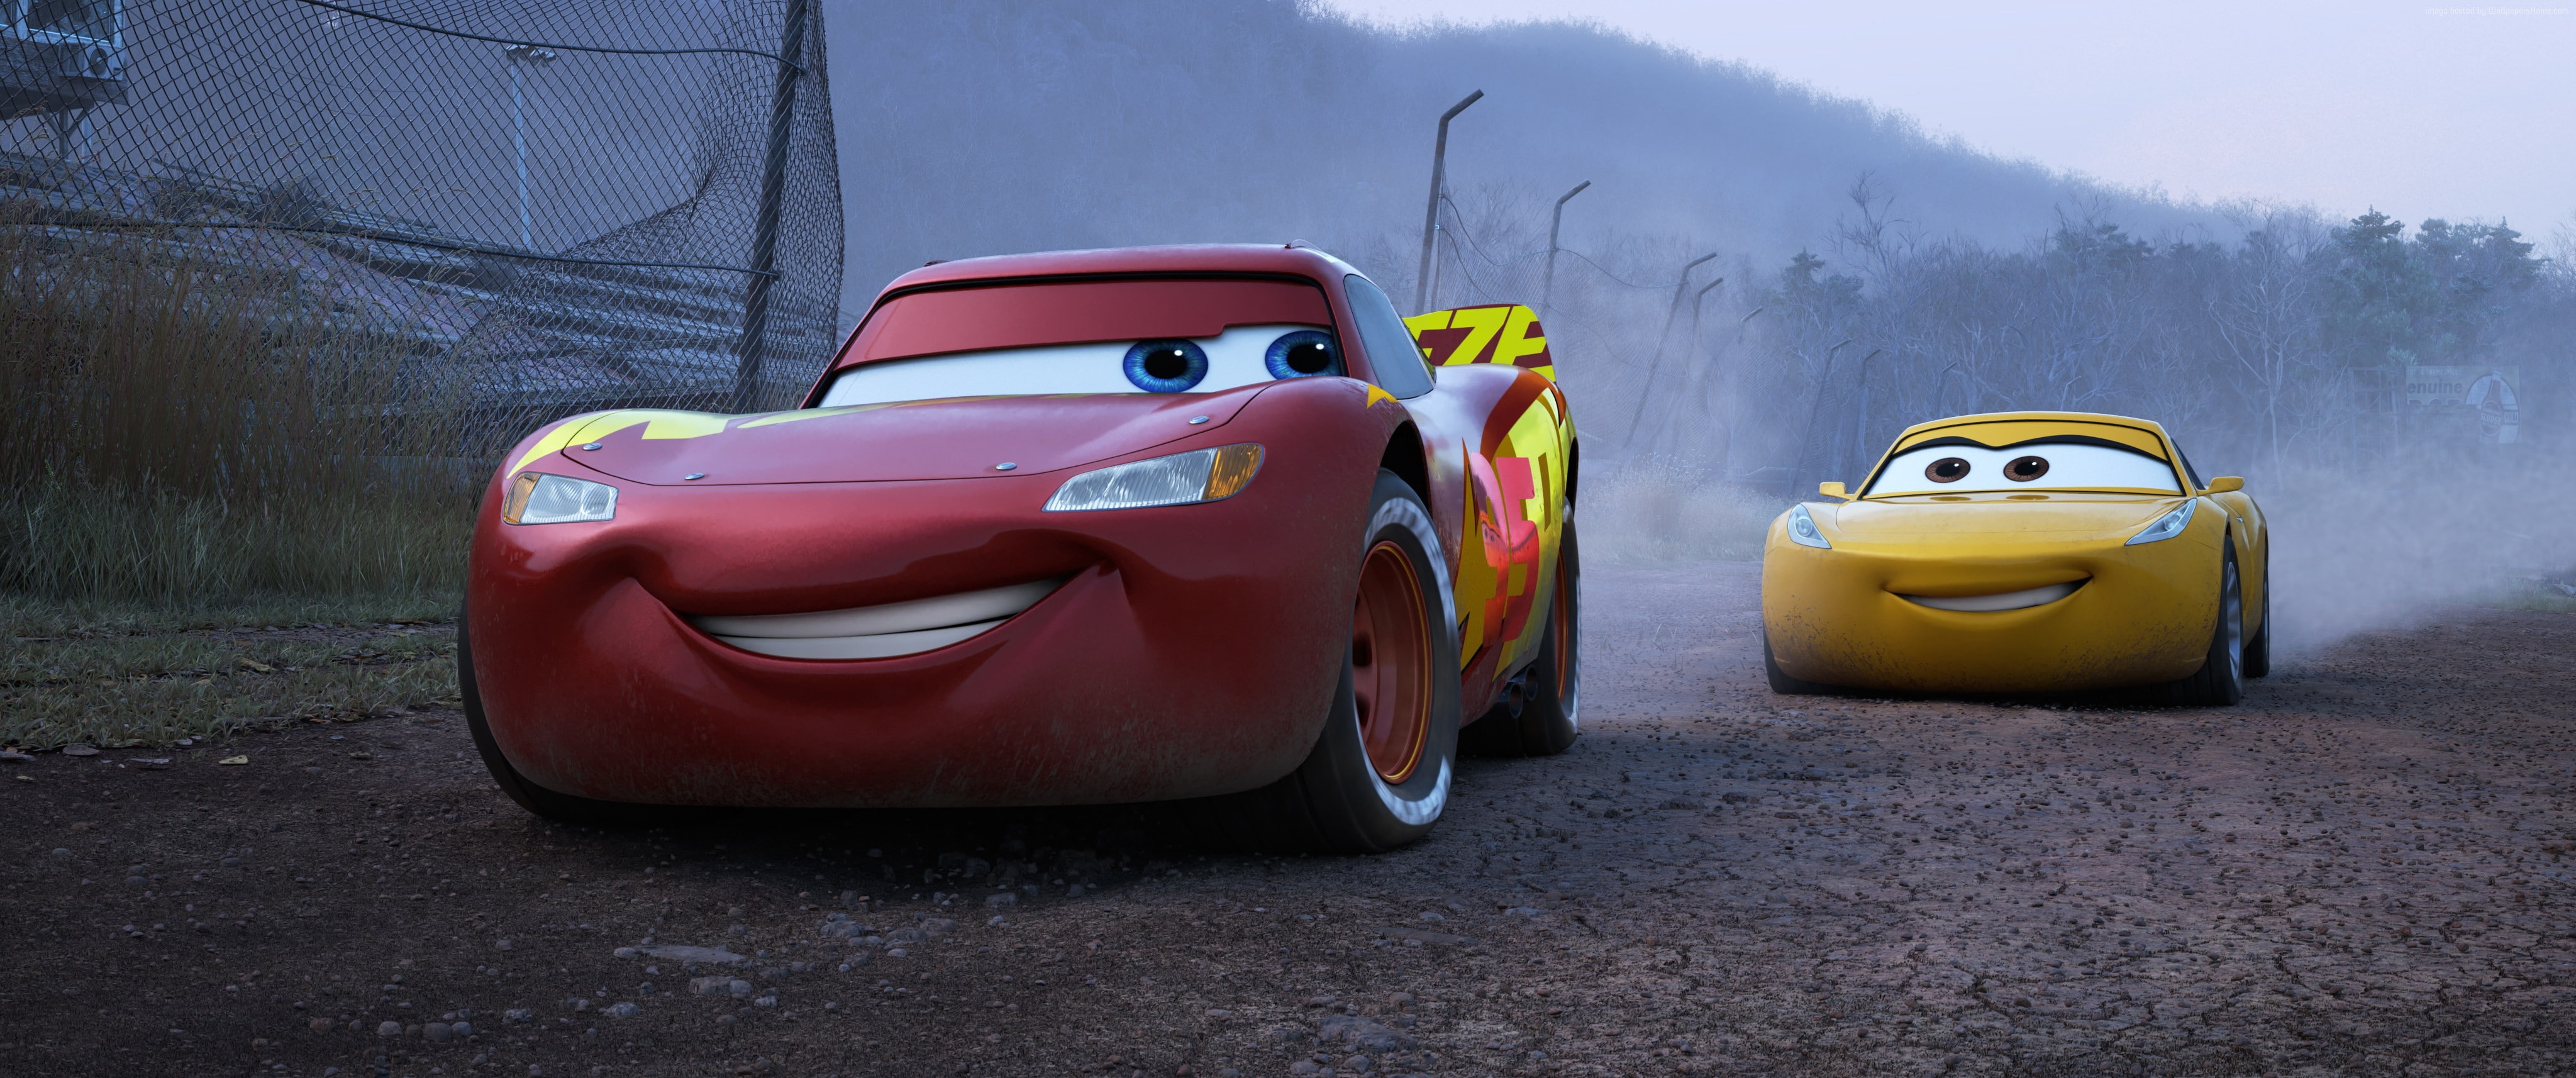 best animation movies, Cars 3, Owen Wilson